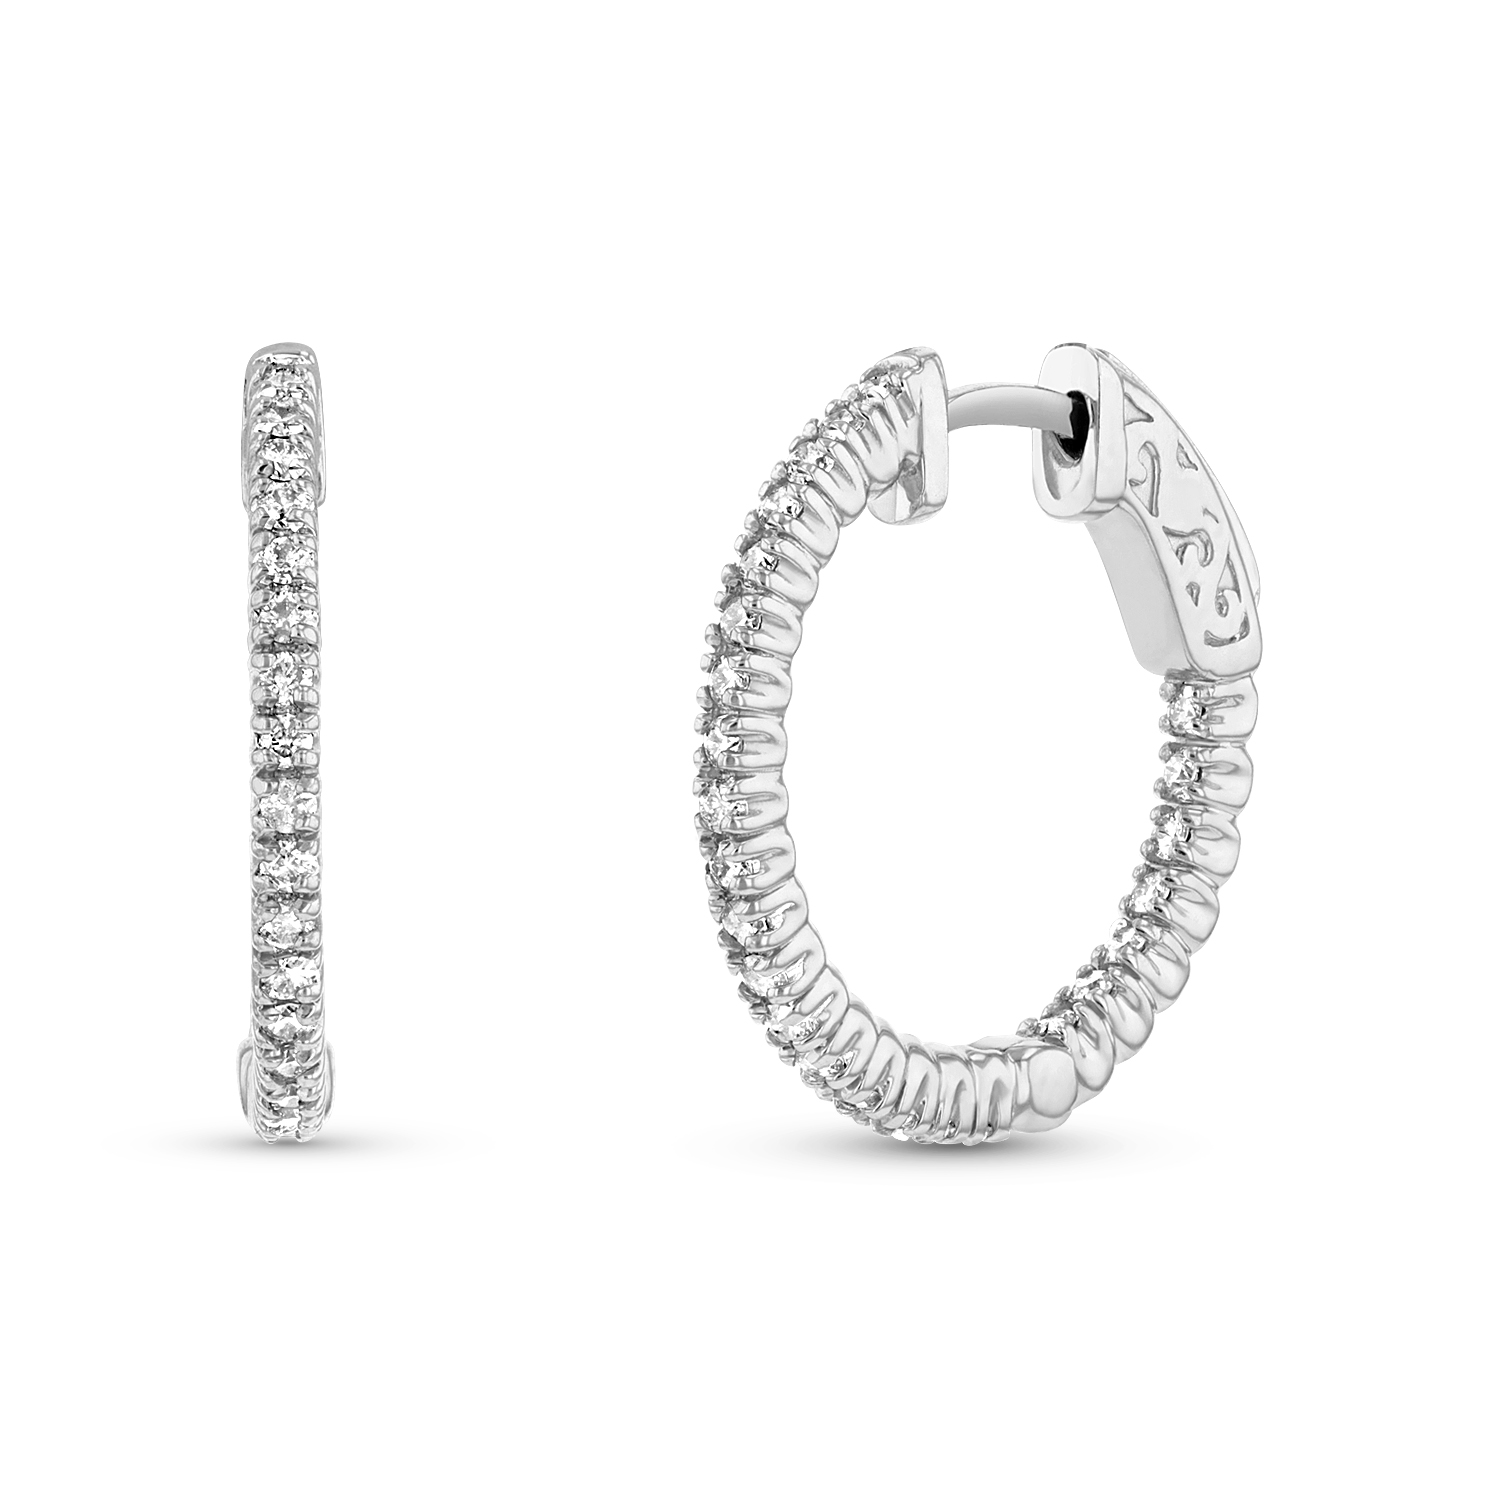 View 0.50ctw Diamond Hoop Earrings in 14k White Gold